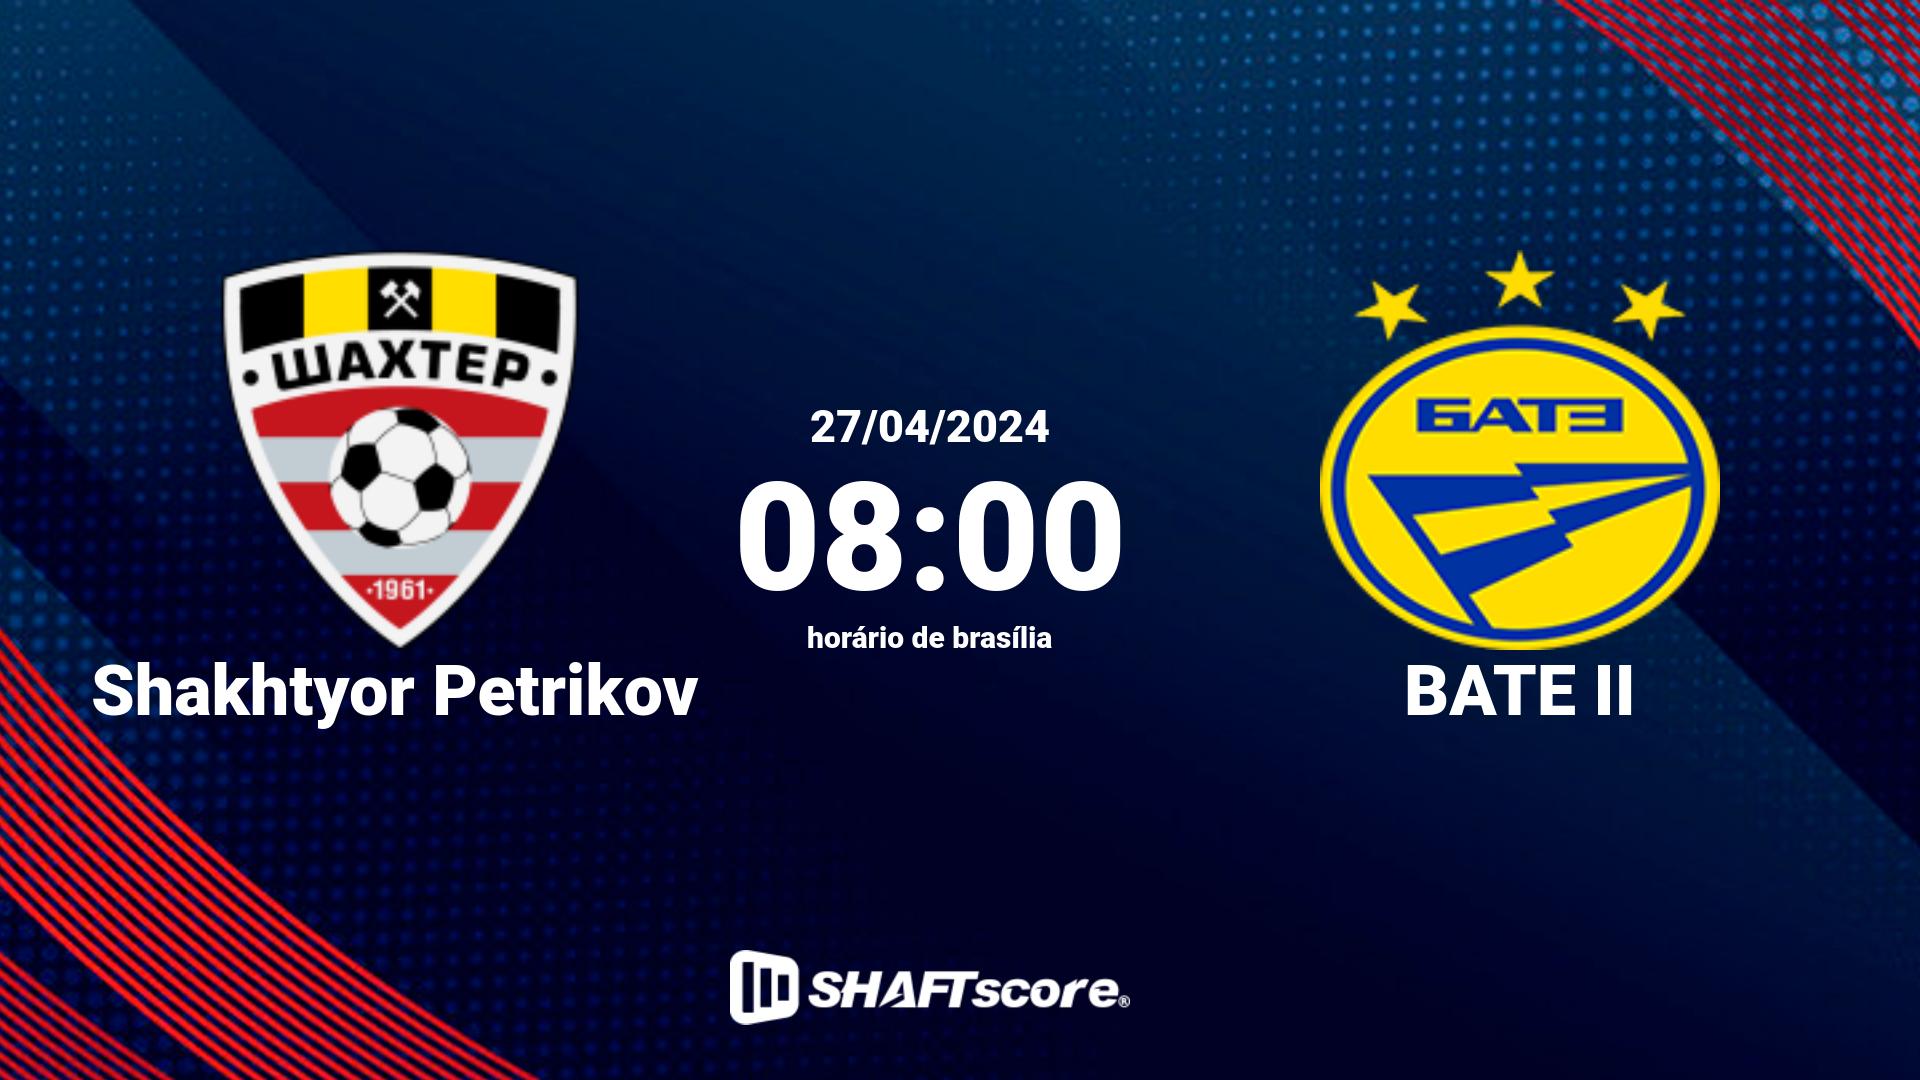 Estatísticas do jogo Shakhtyor Petrikov vs BATE II 27.04 08:00